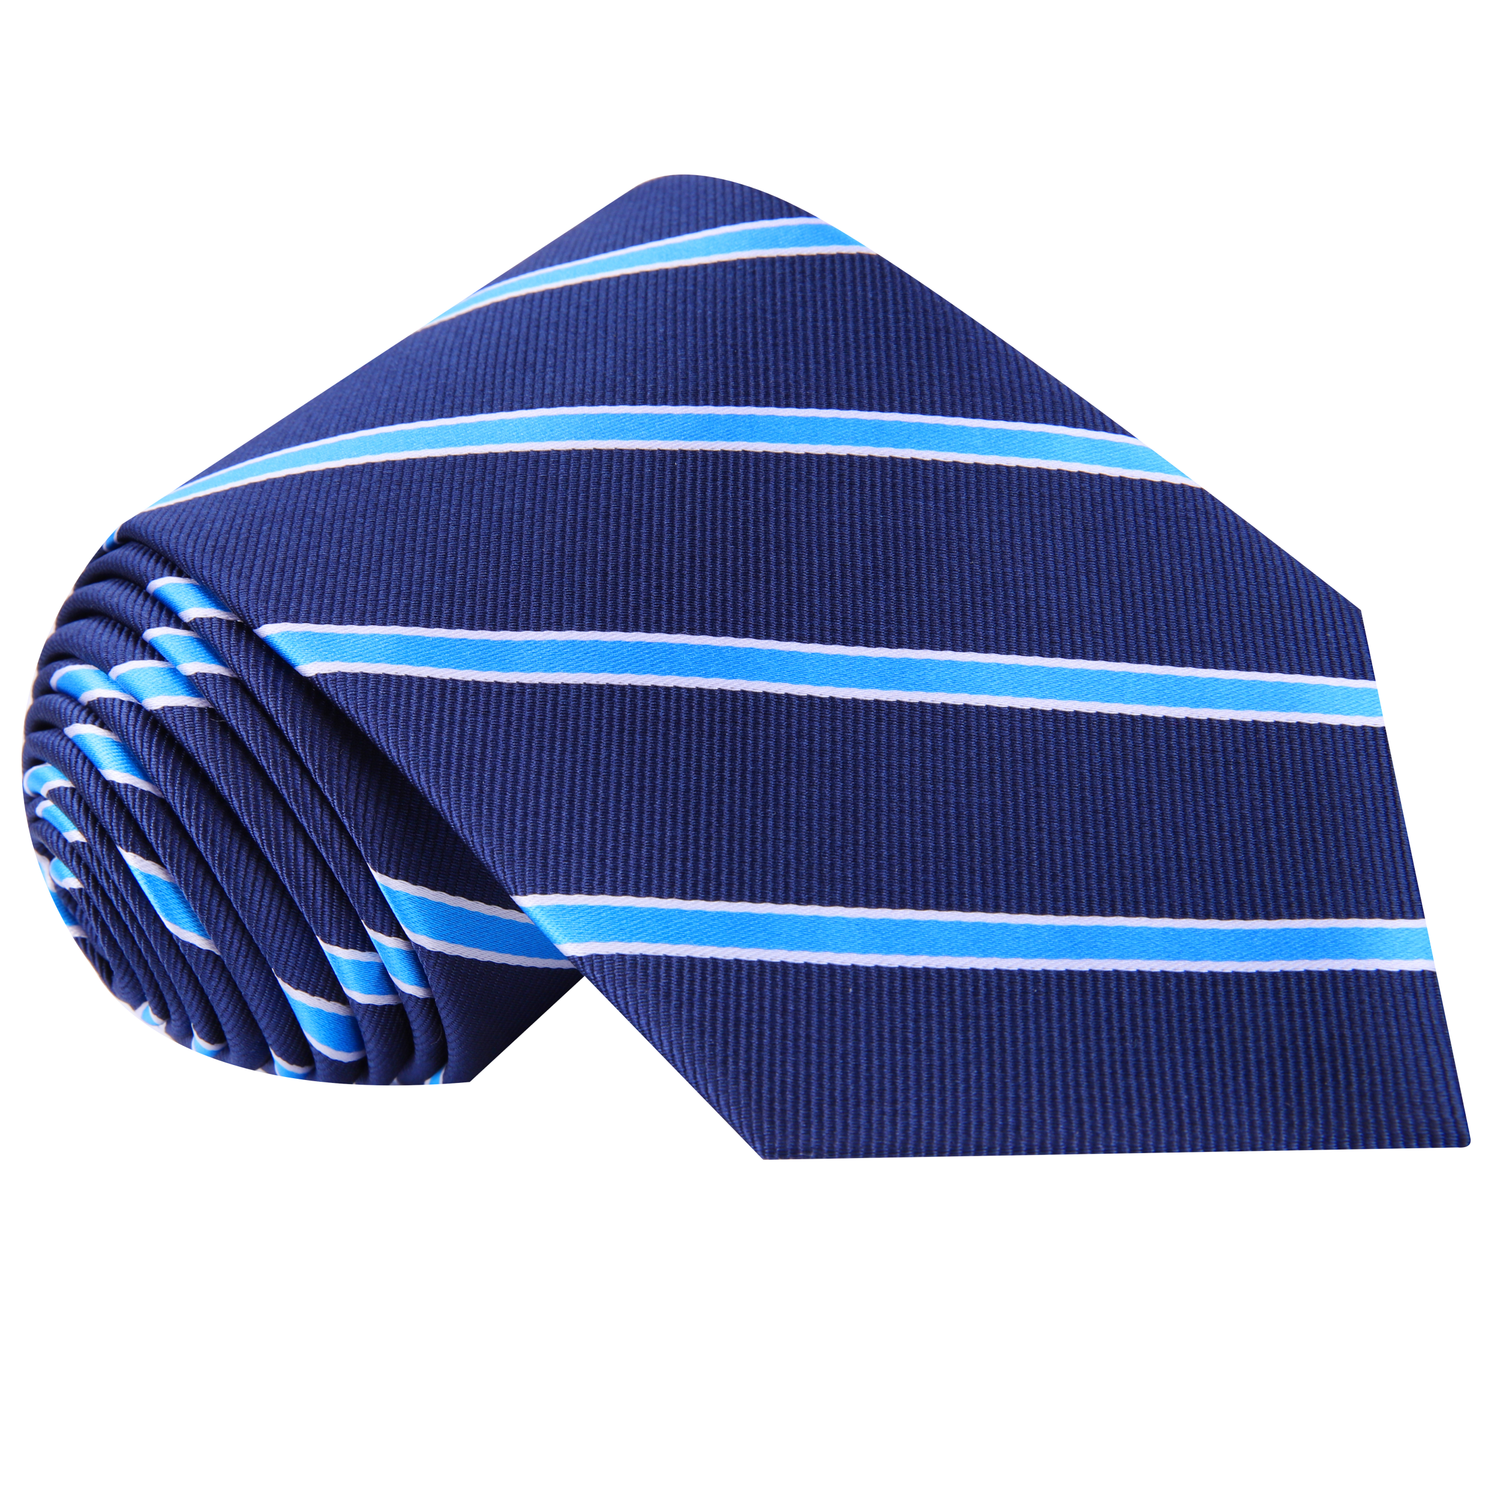 Coach PRIME Deion Sanders Deep Blue, Light Blue Stripe Tie